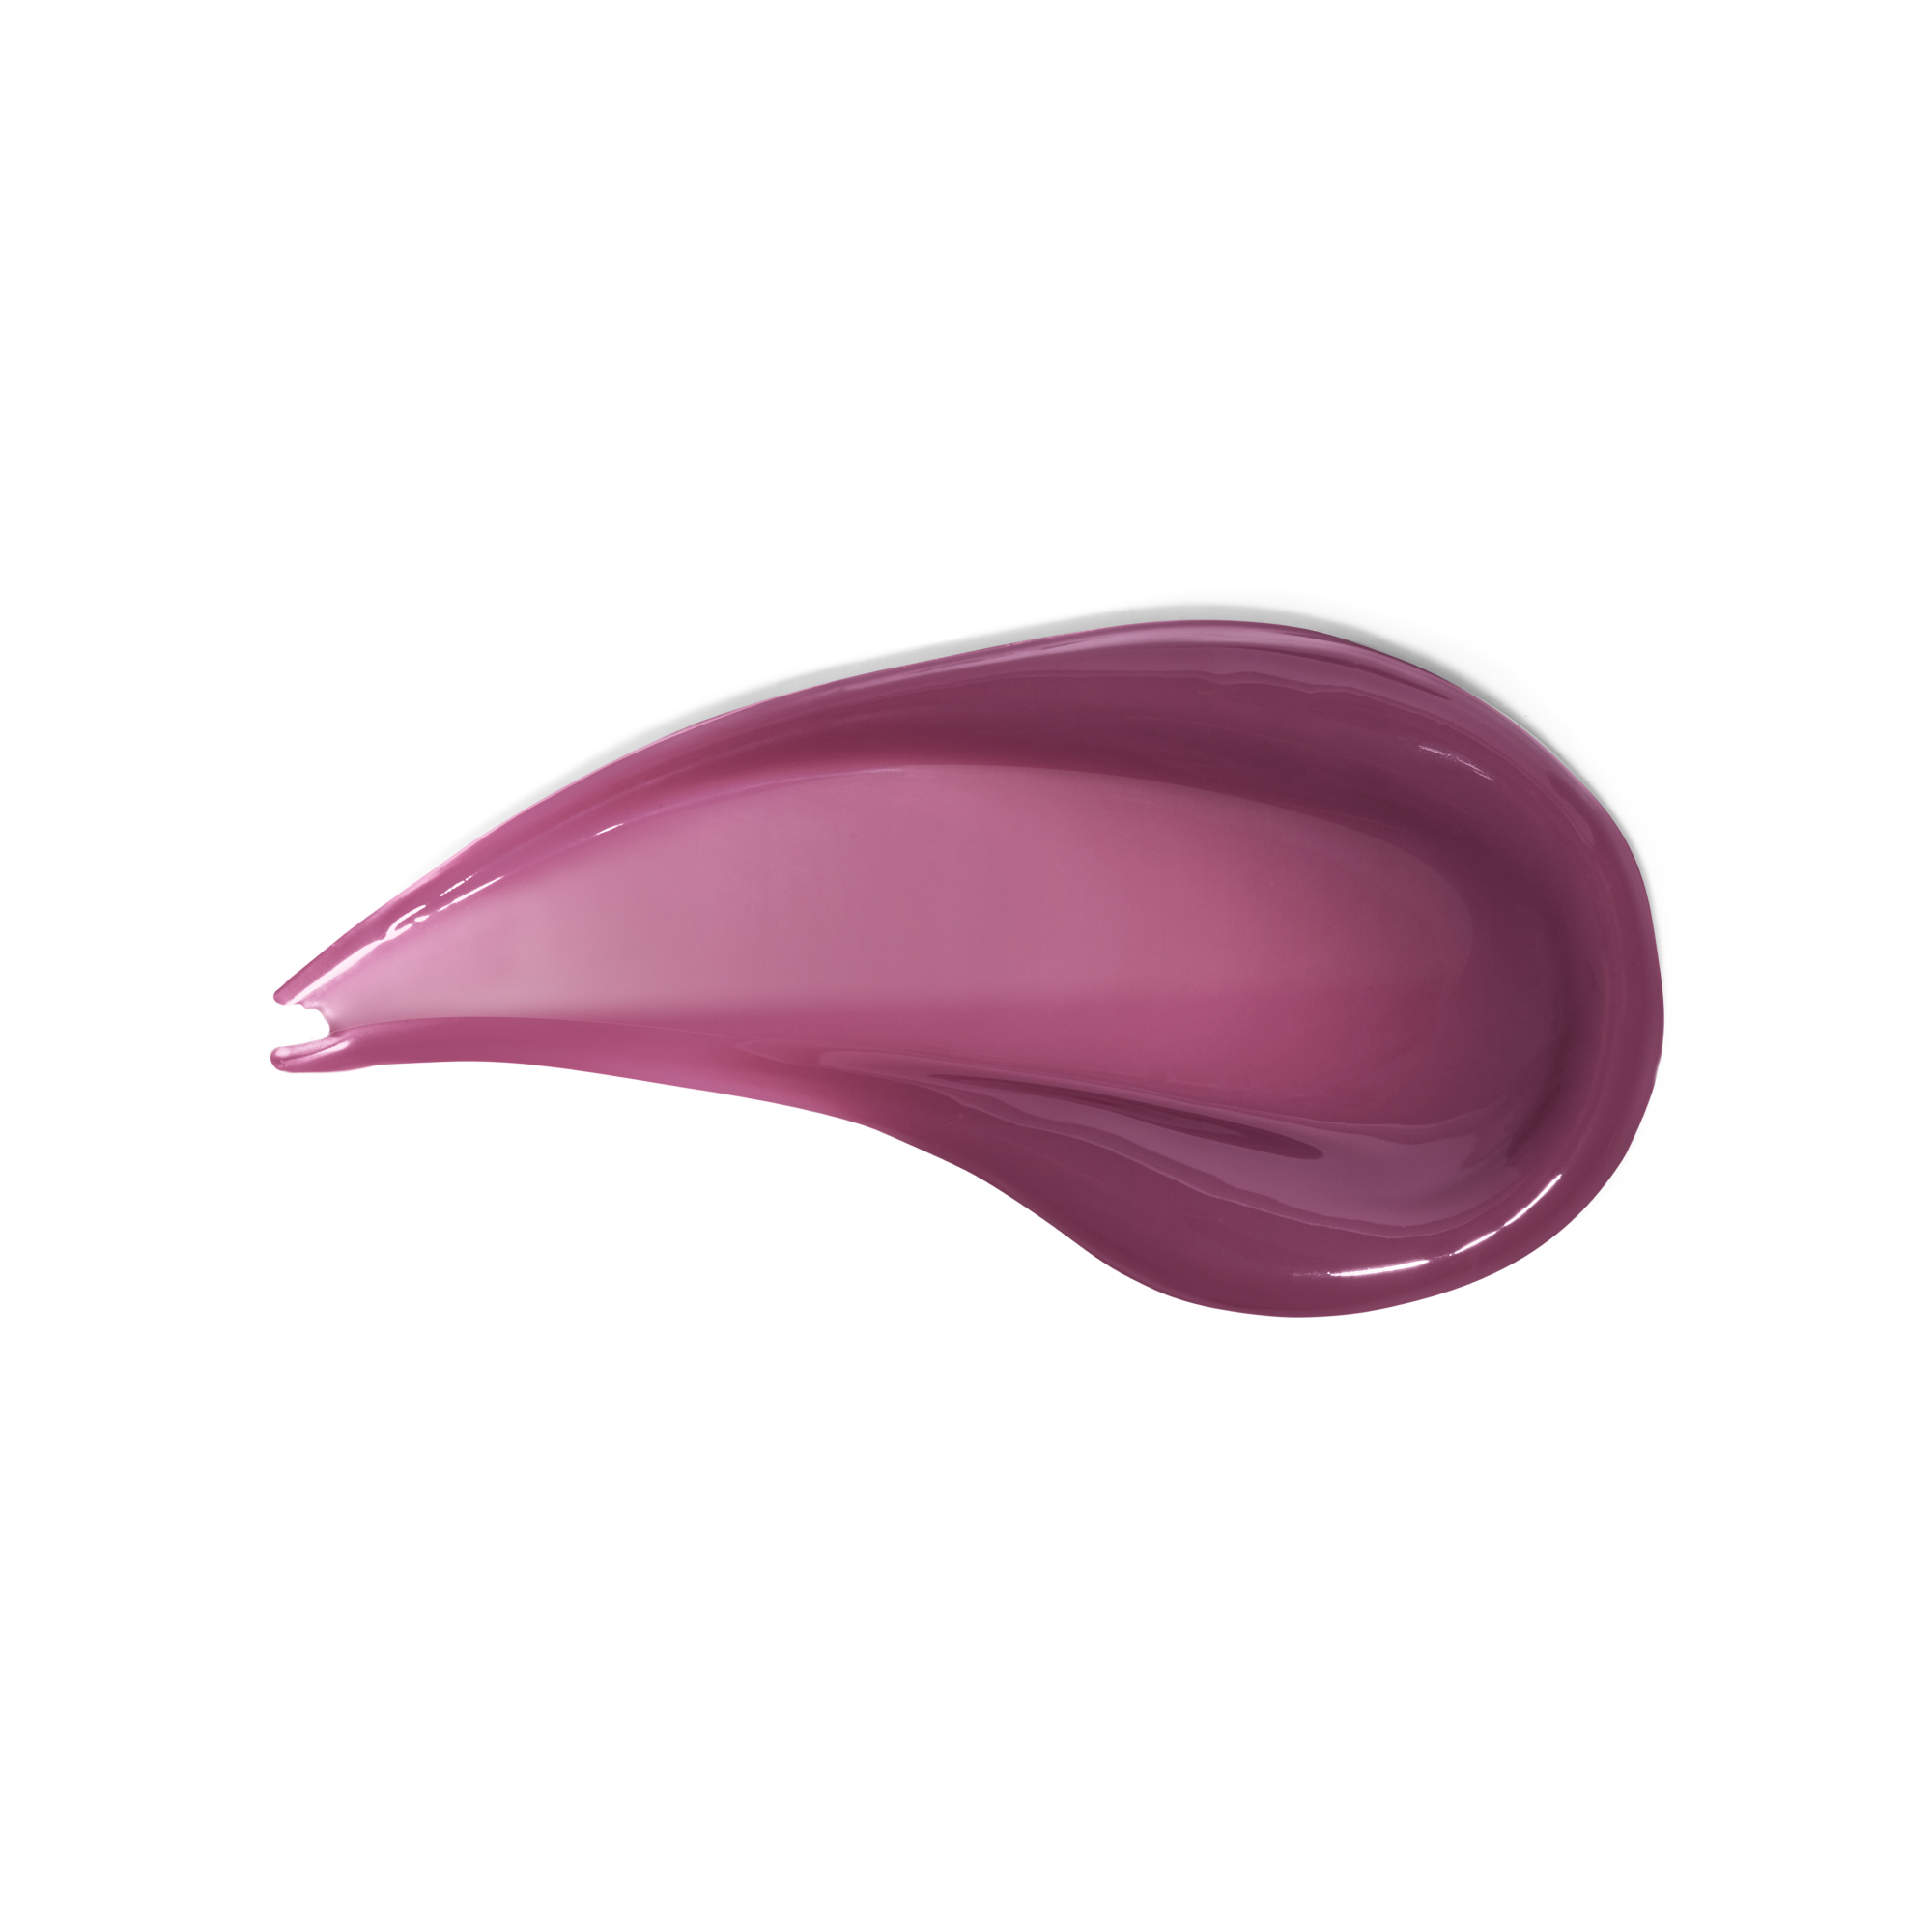 Benefit Cosmetics Lip Butter Balm, in Colour: Secret Oasis, Size: 10.0 ml